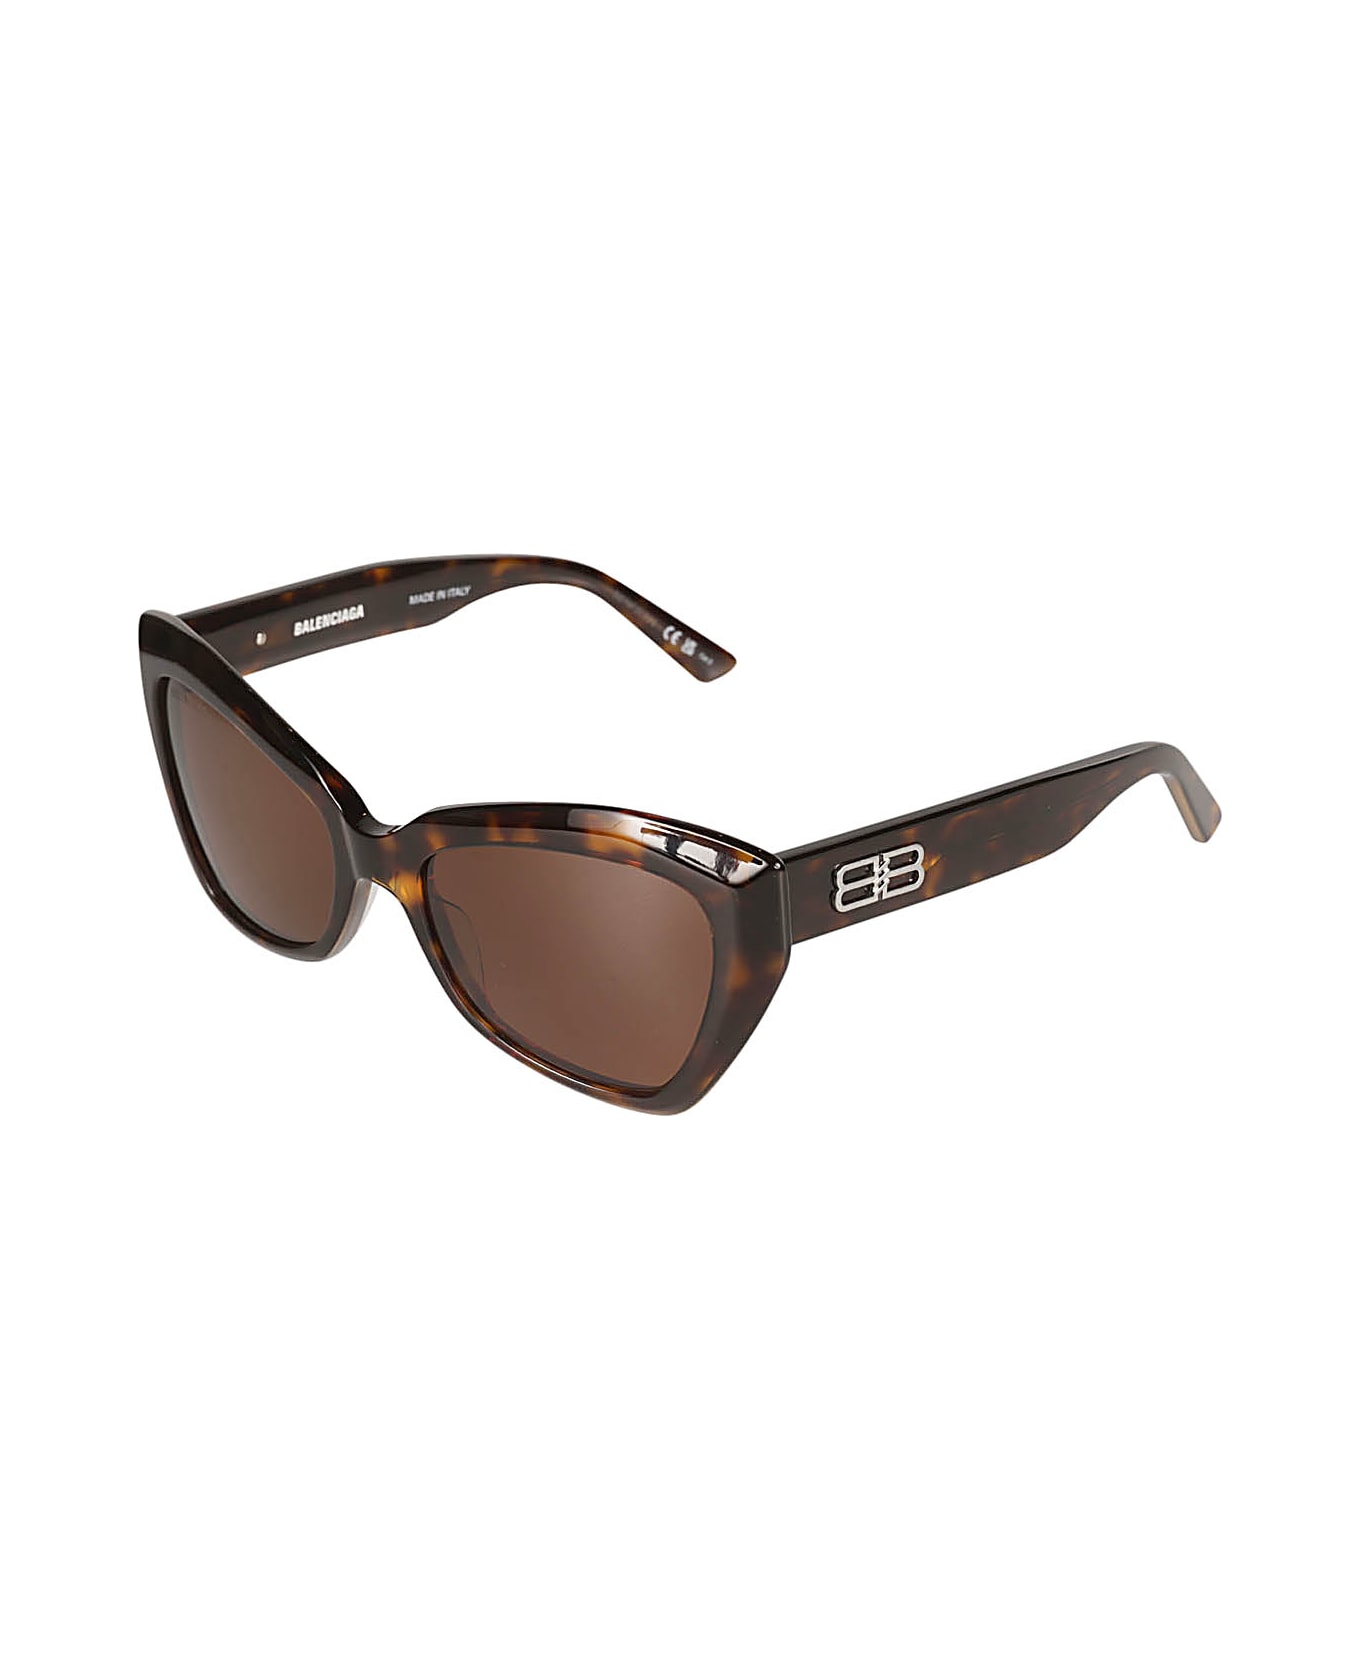 Balenciaga Eyewear Flame Effect Butterfly Frame Sunglasses - Havana/Brown